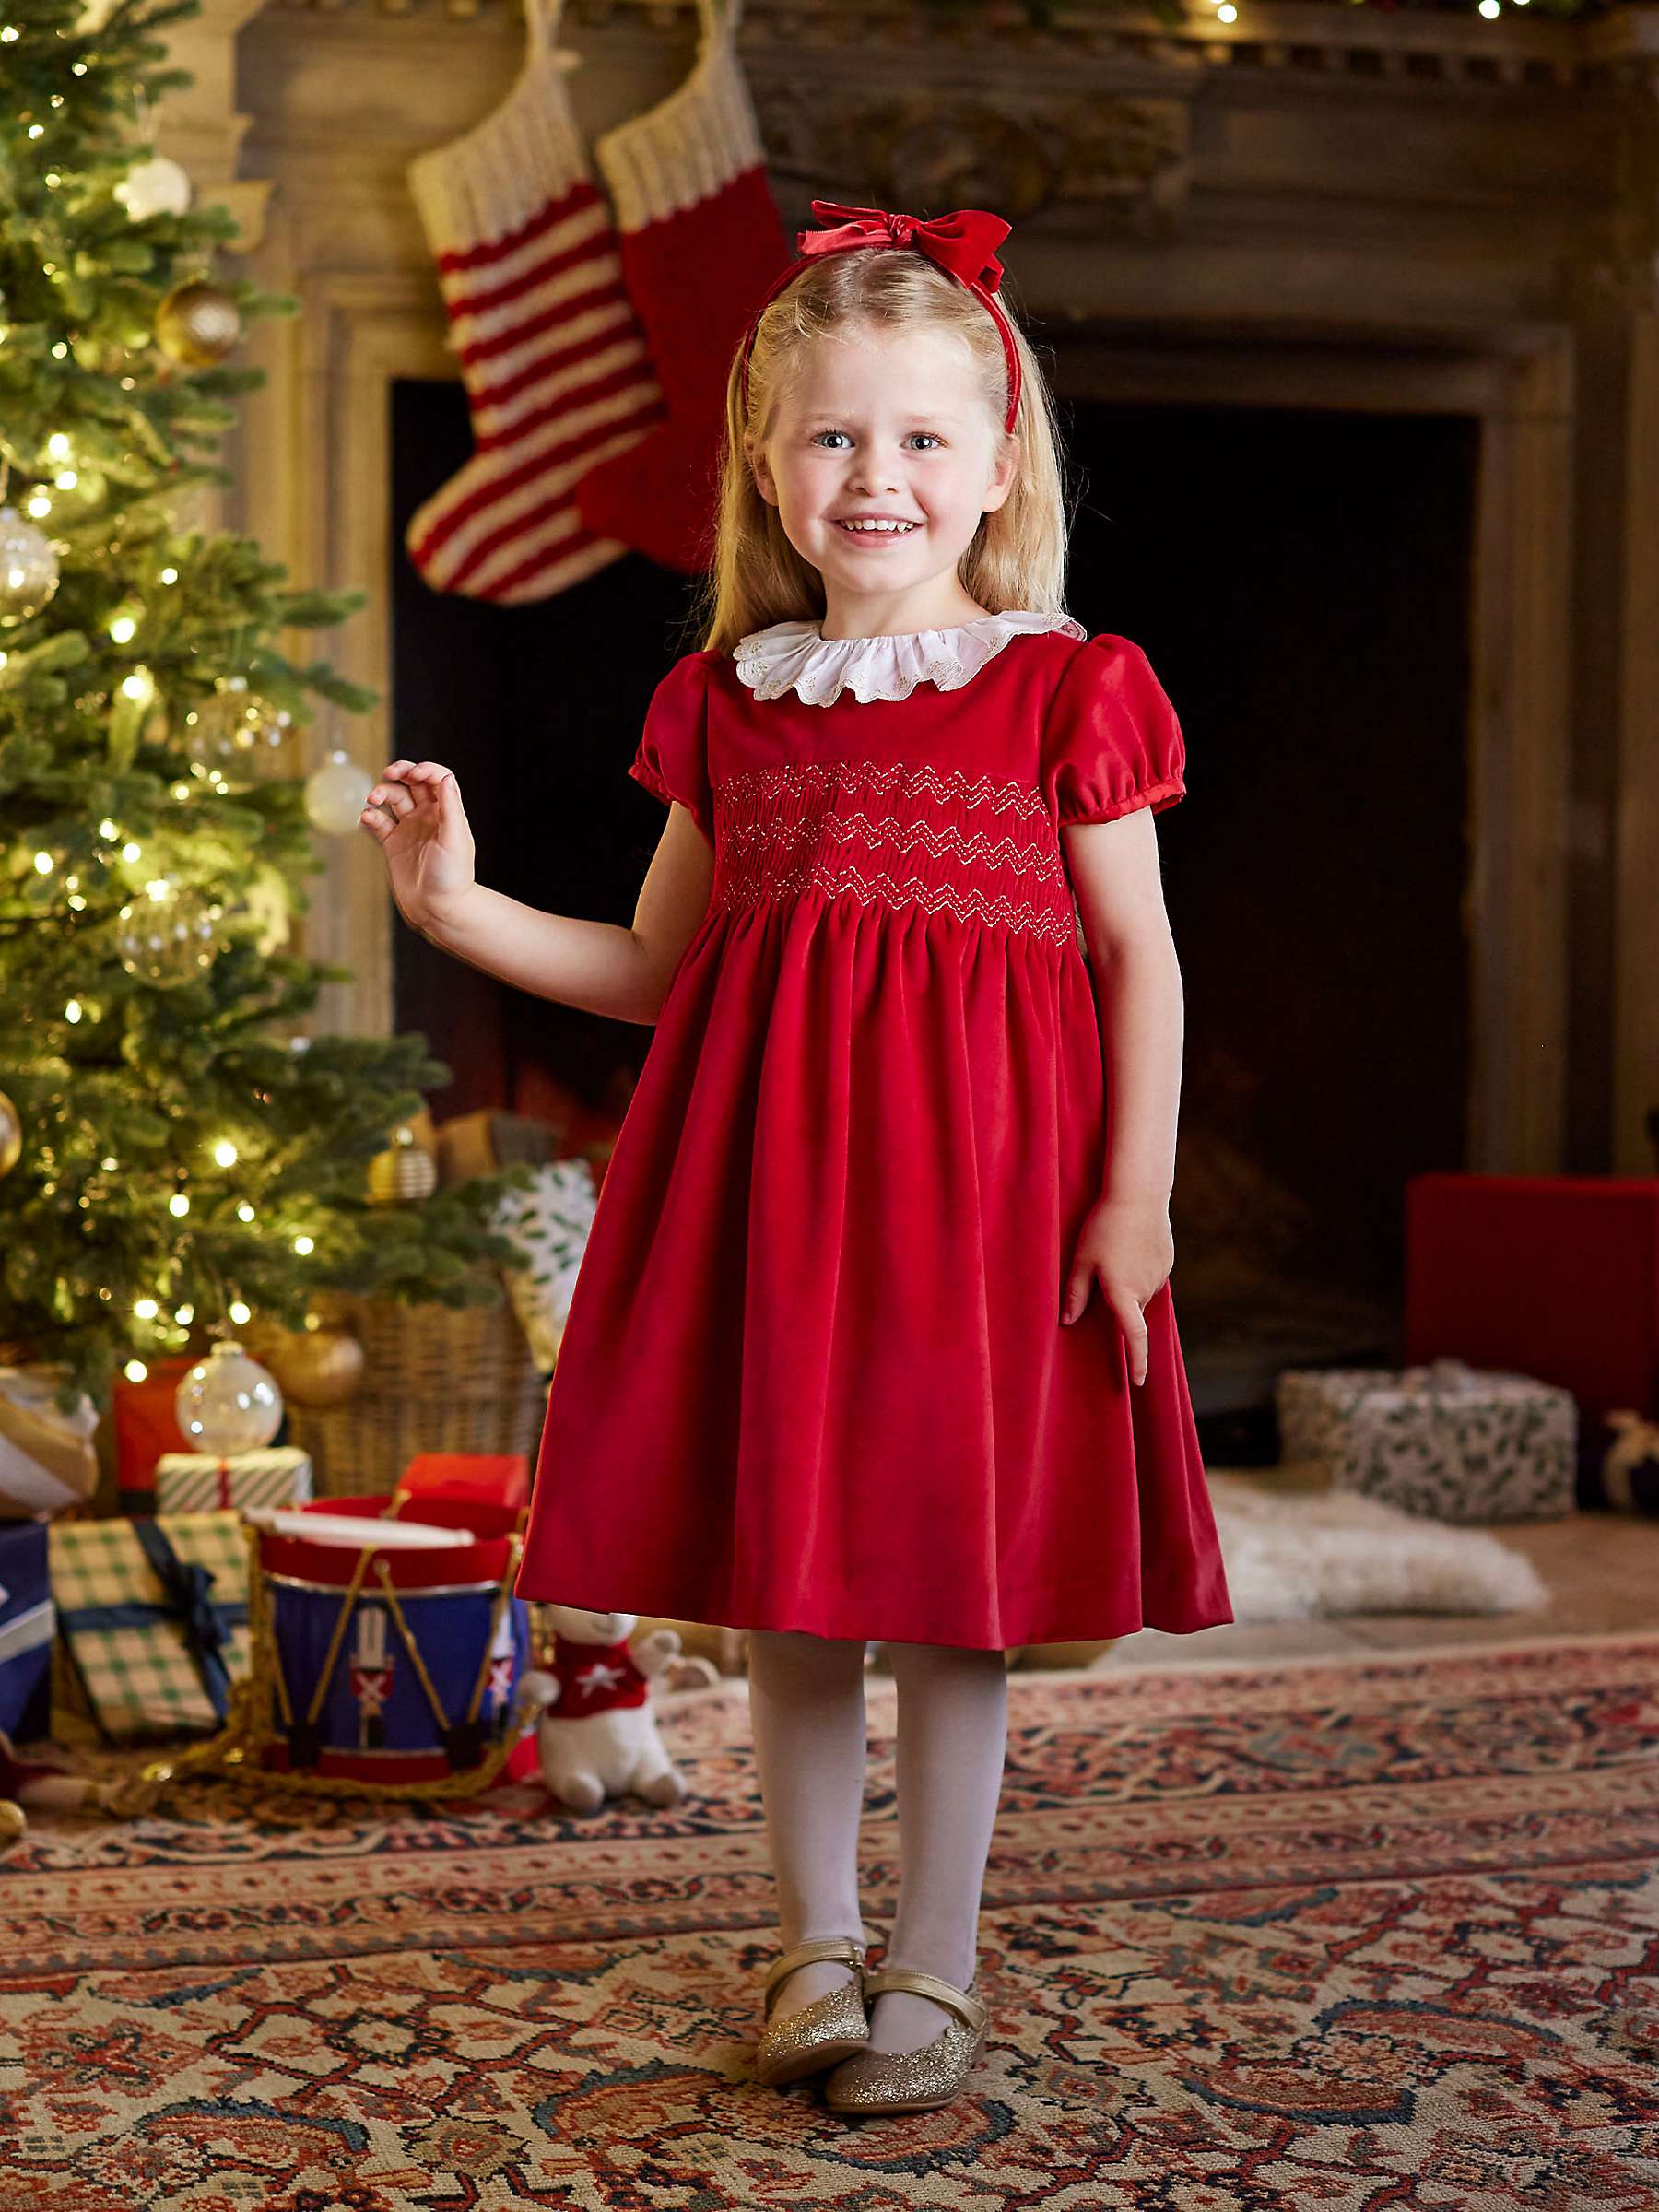 Buy Trotters Kids' Octavia Velvet Party Dress Online at johnlewis.com